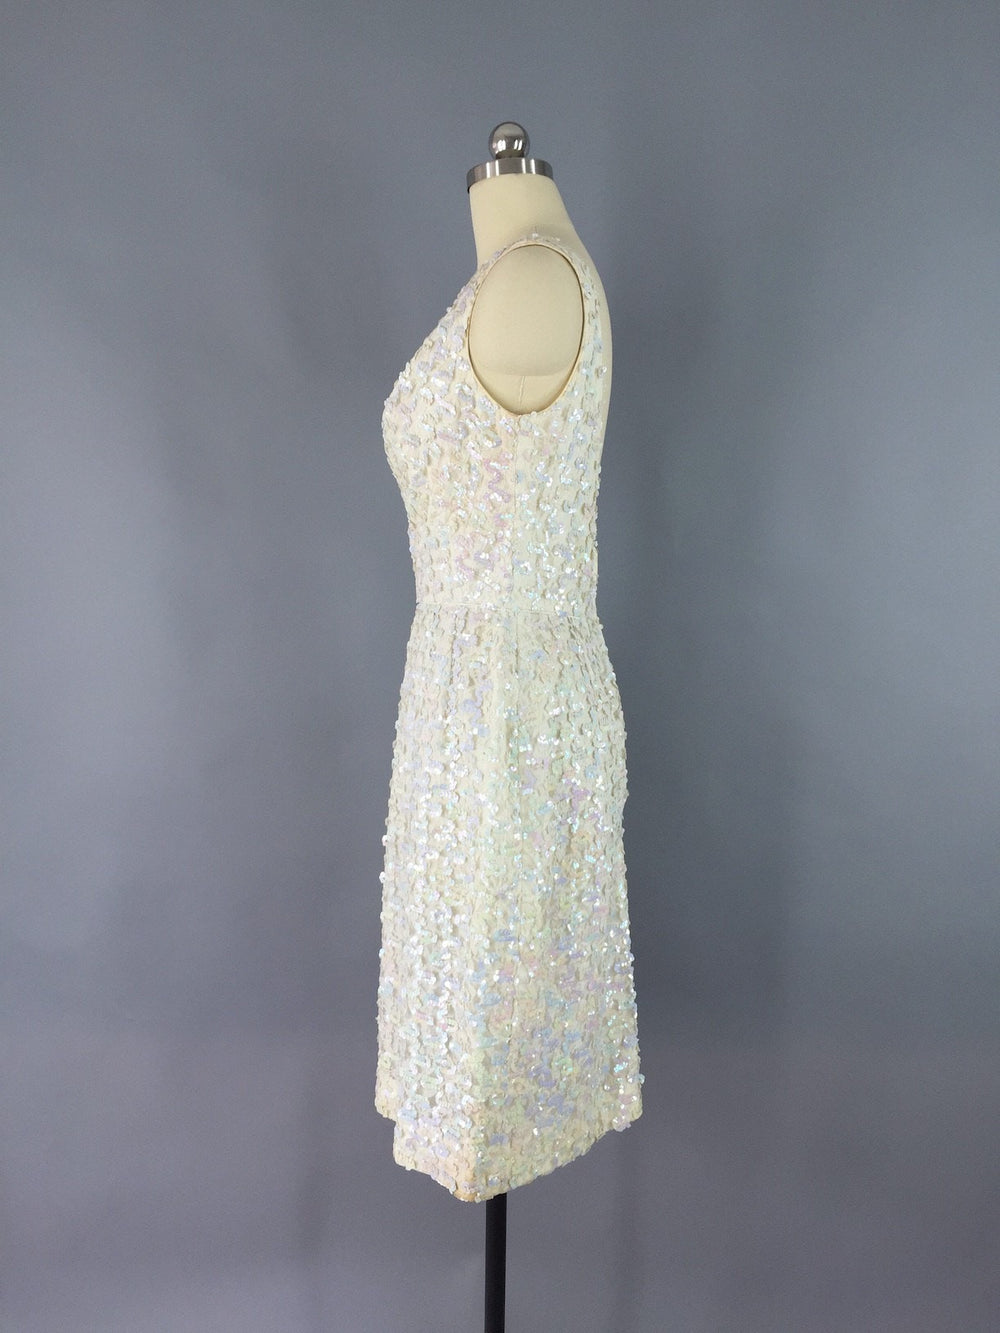 Vintage 1960s Dress / White Sequined Cocktail Dress